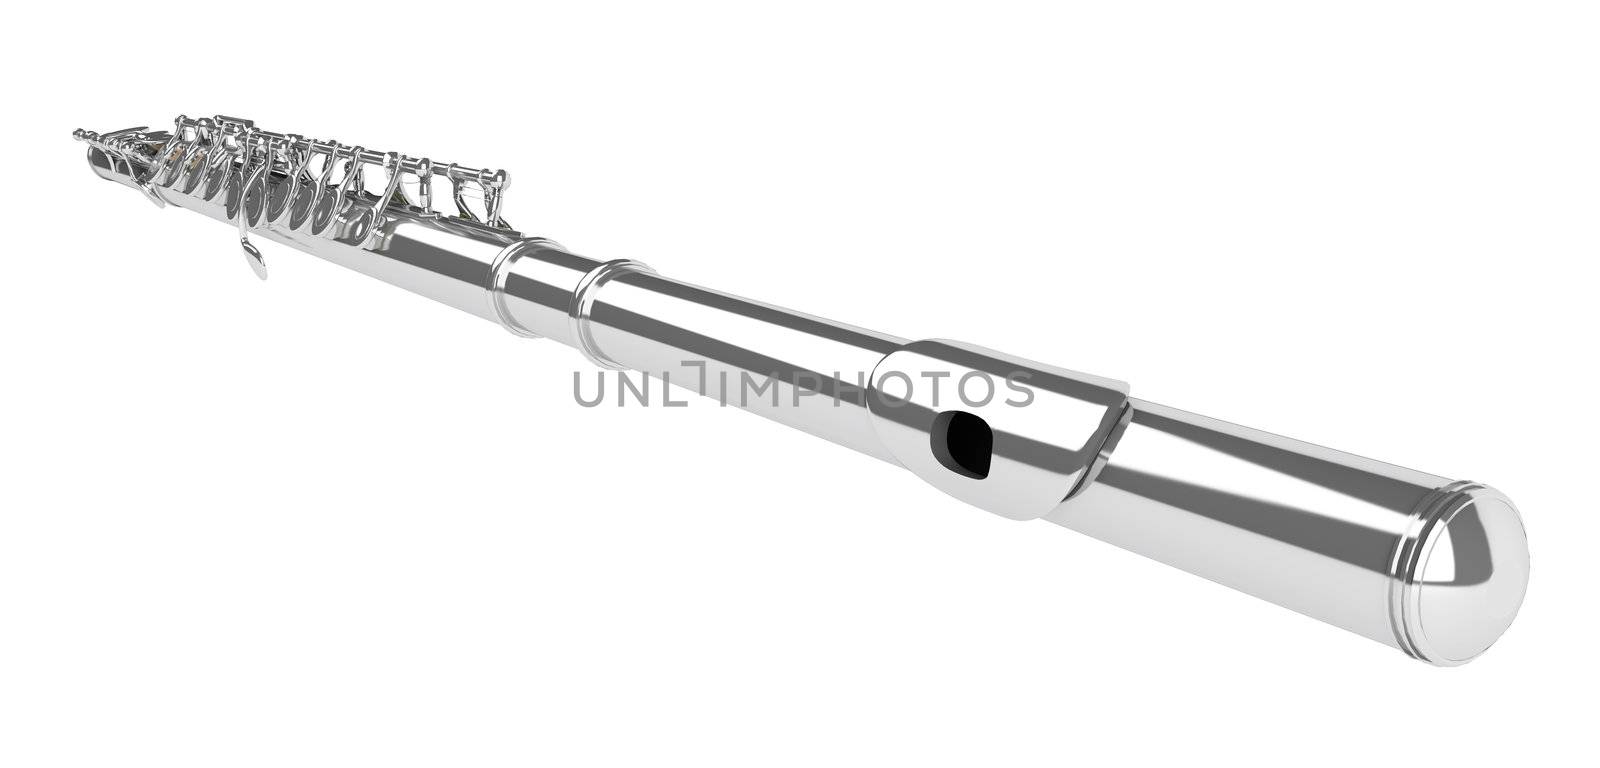 Concert flute or Transverse flute, Boehm flute, C flute isolated on white background